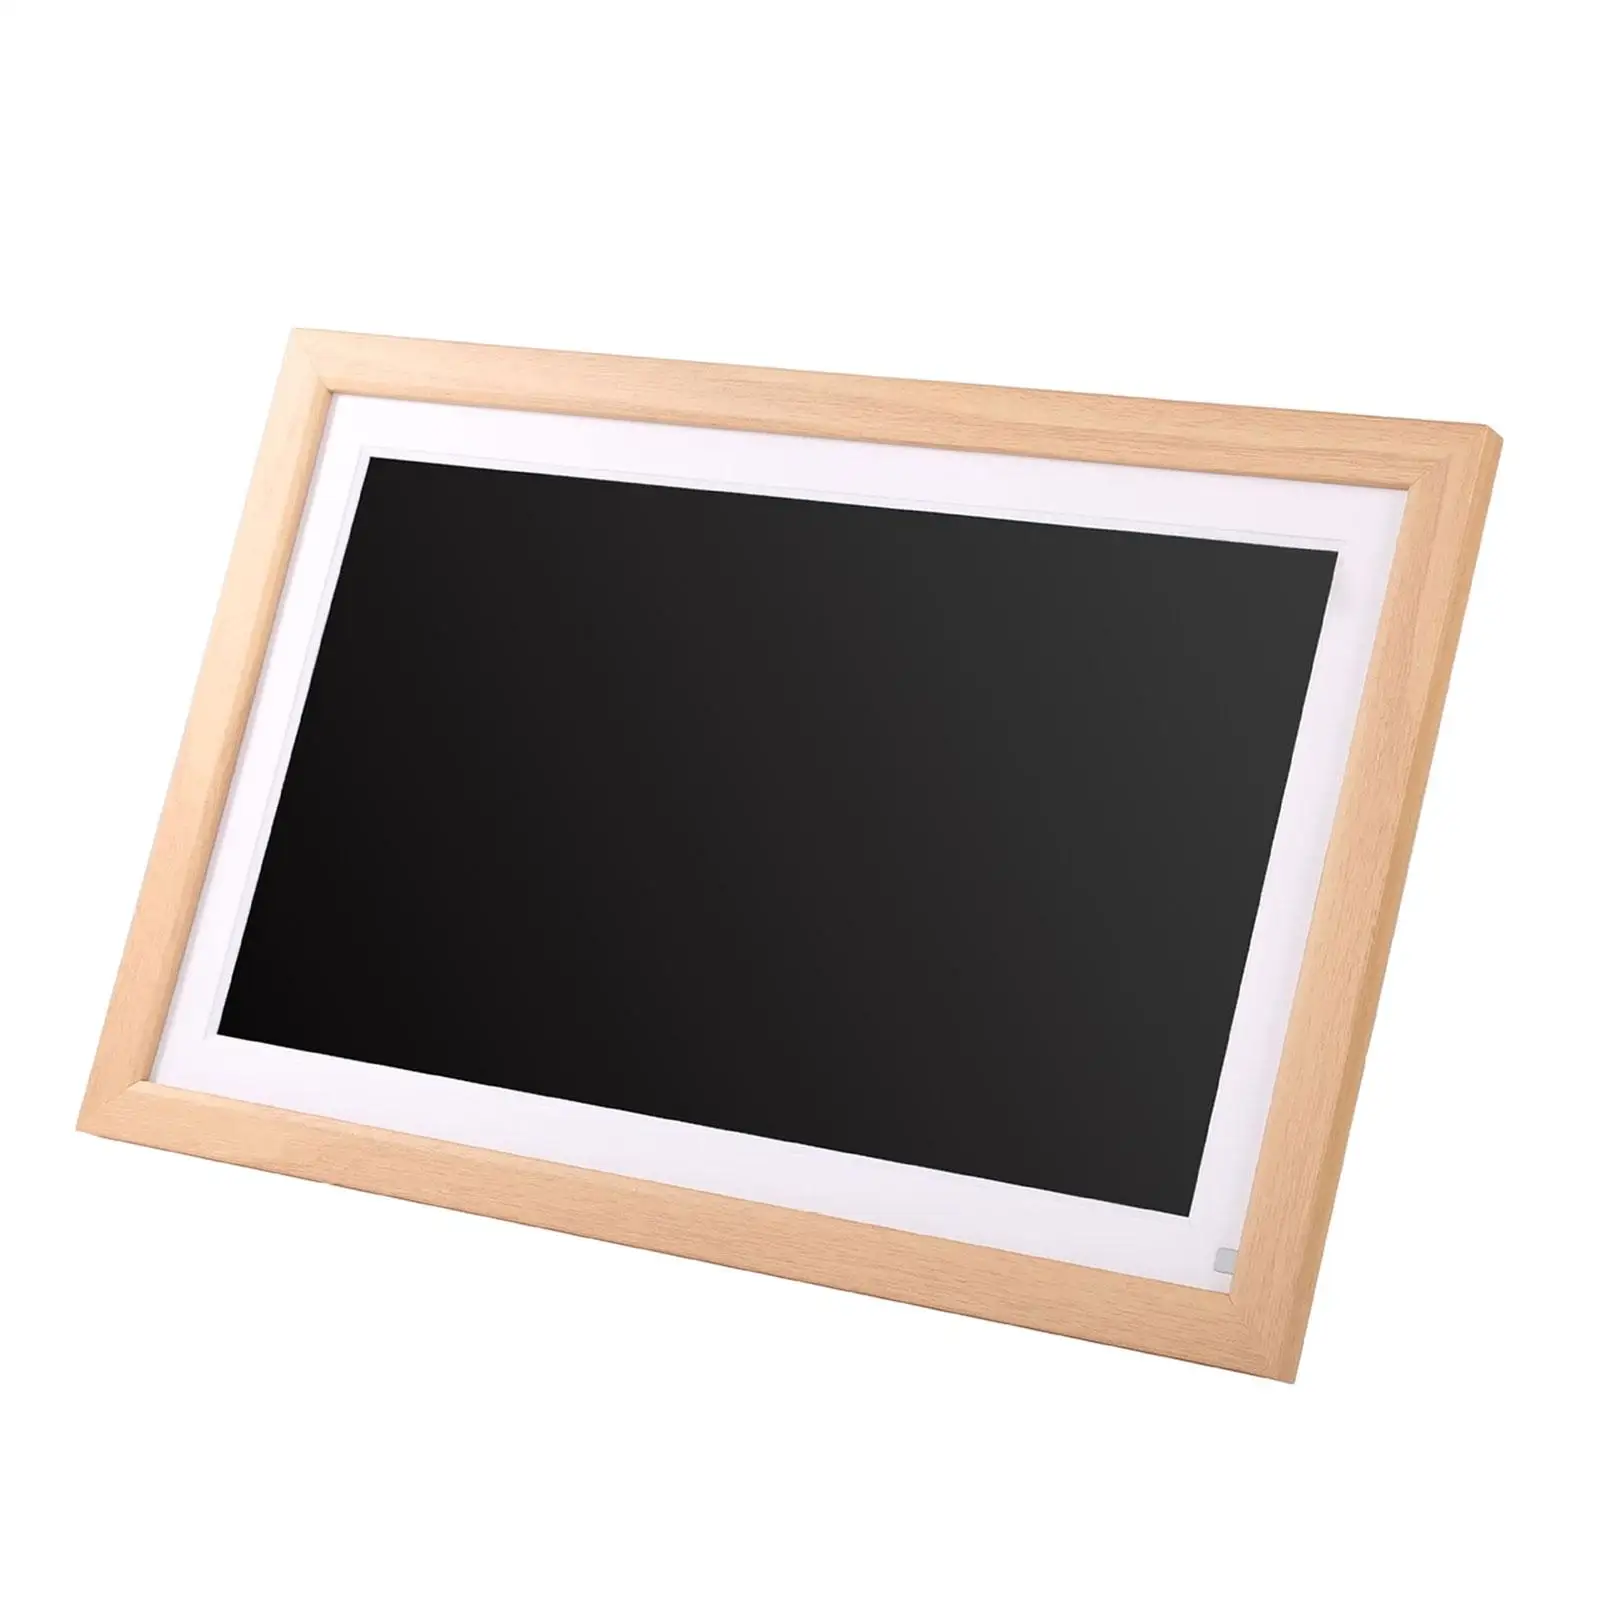 Digital Picture frame Brightness Easy Setup Built in 32GB Memory 1080P Photo Frame Digital Photo Frame for Birthday Gifts